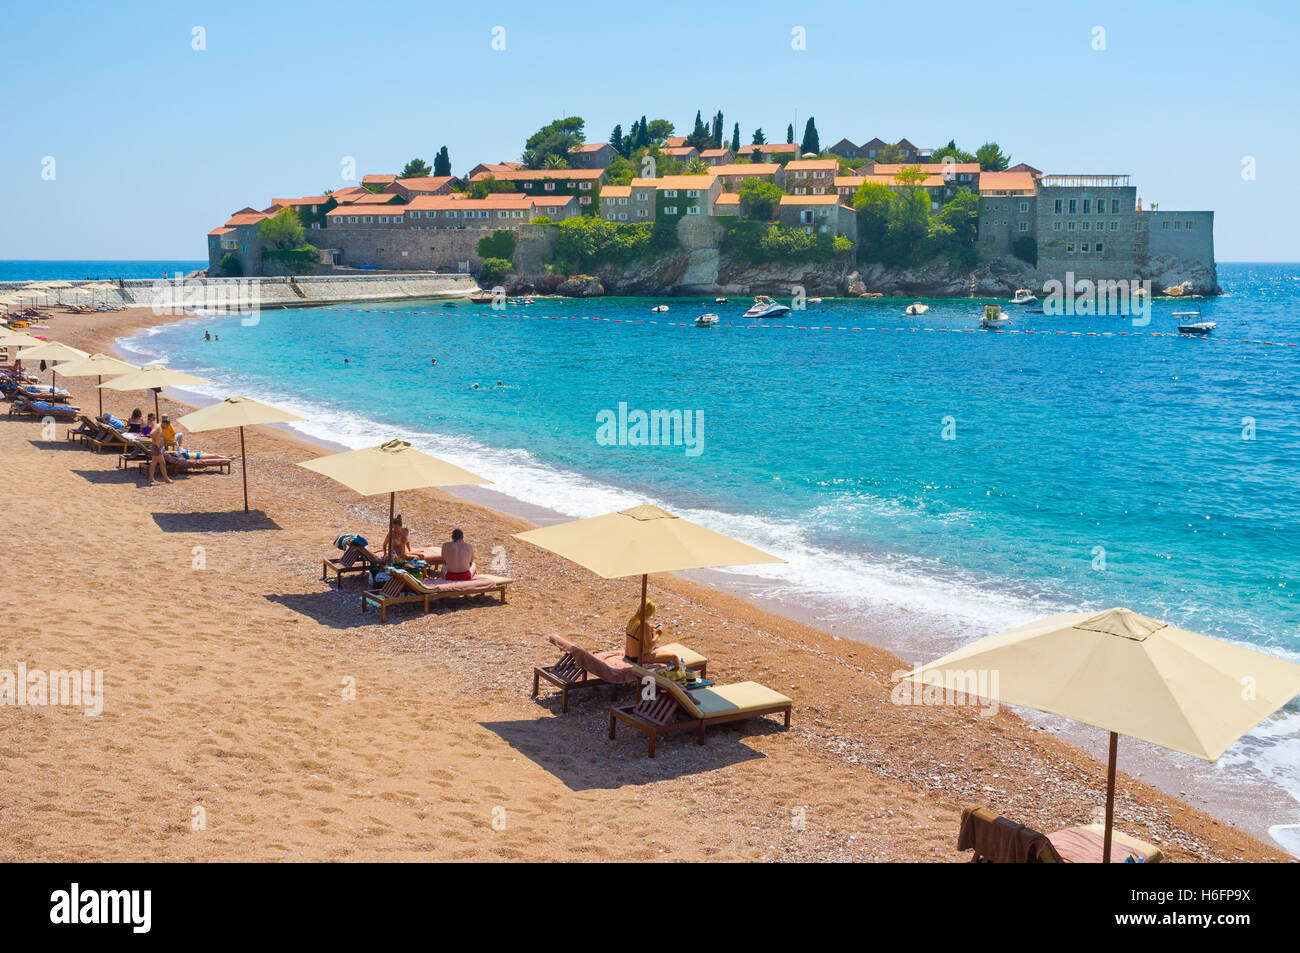 The Sveti Stefan beach belongs to Aman Resorts hotel complex, located on the islet, Sveti Stefan Montenegro Stock Photo